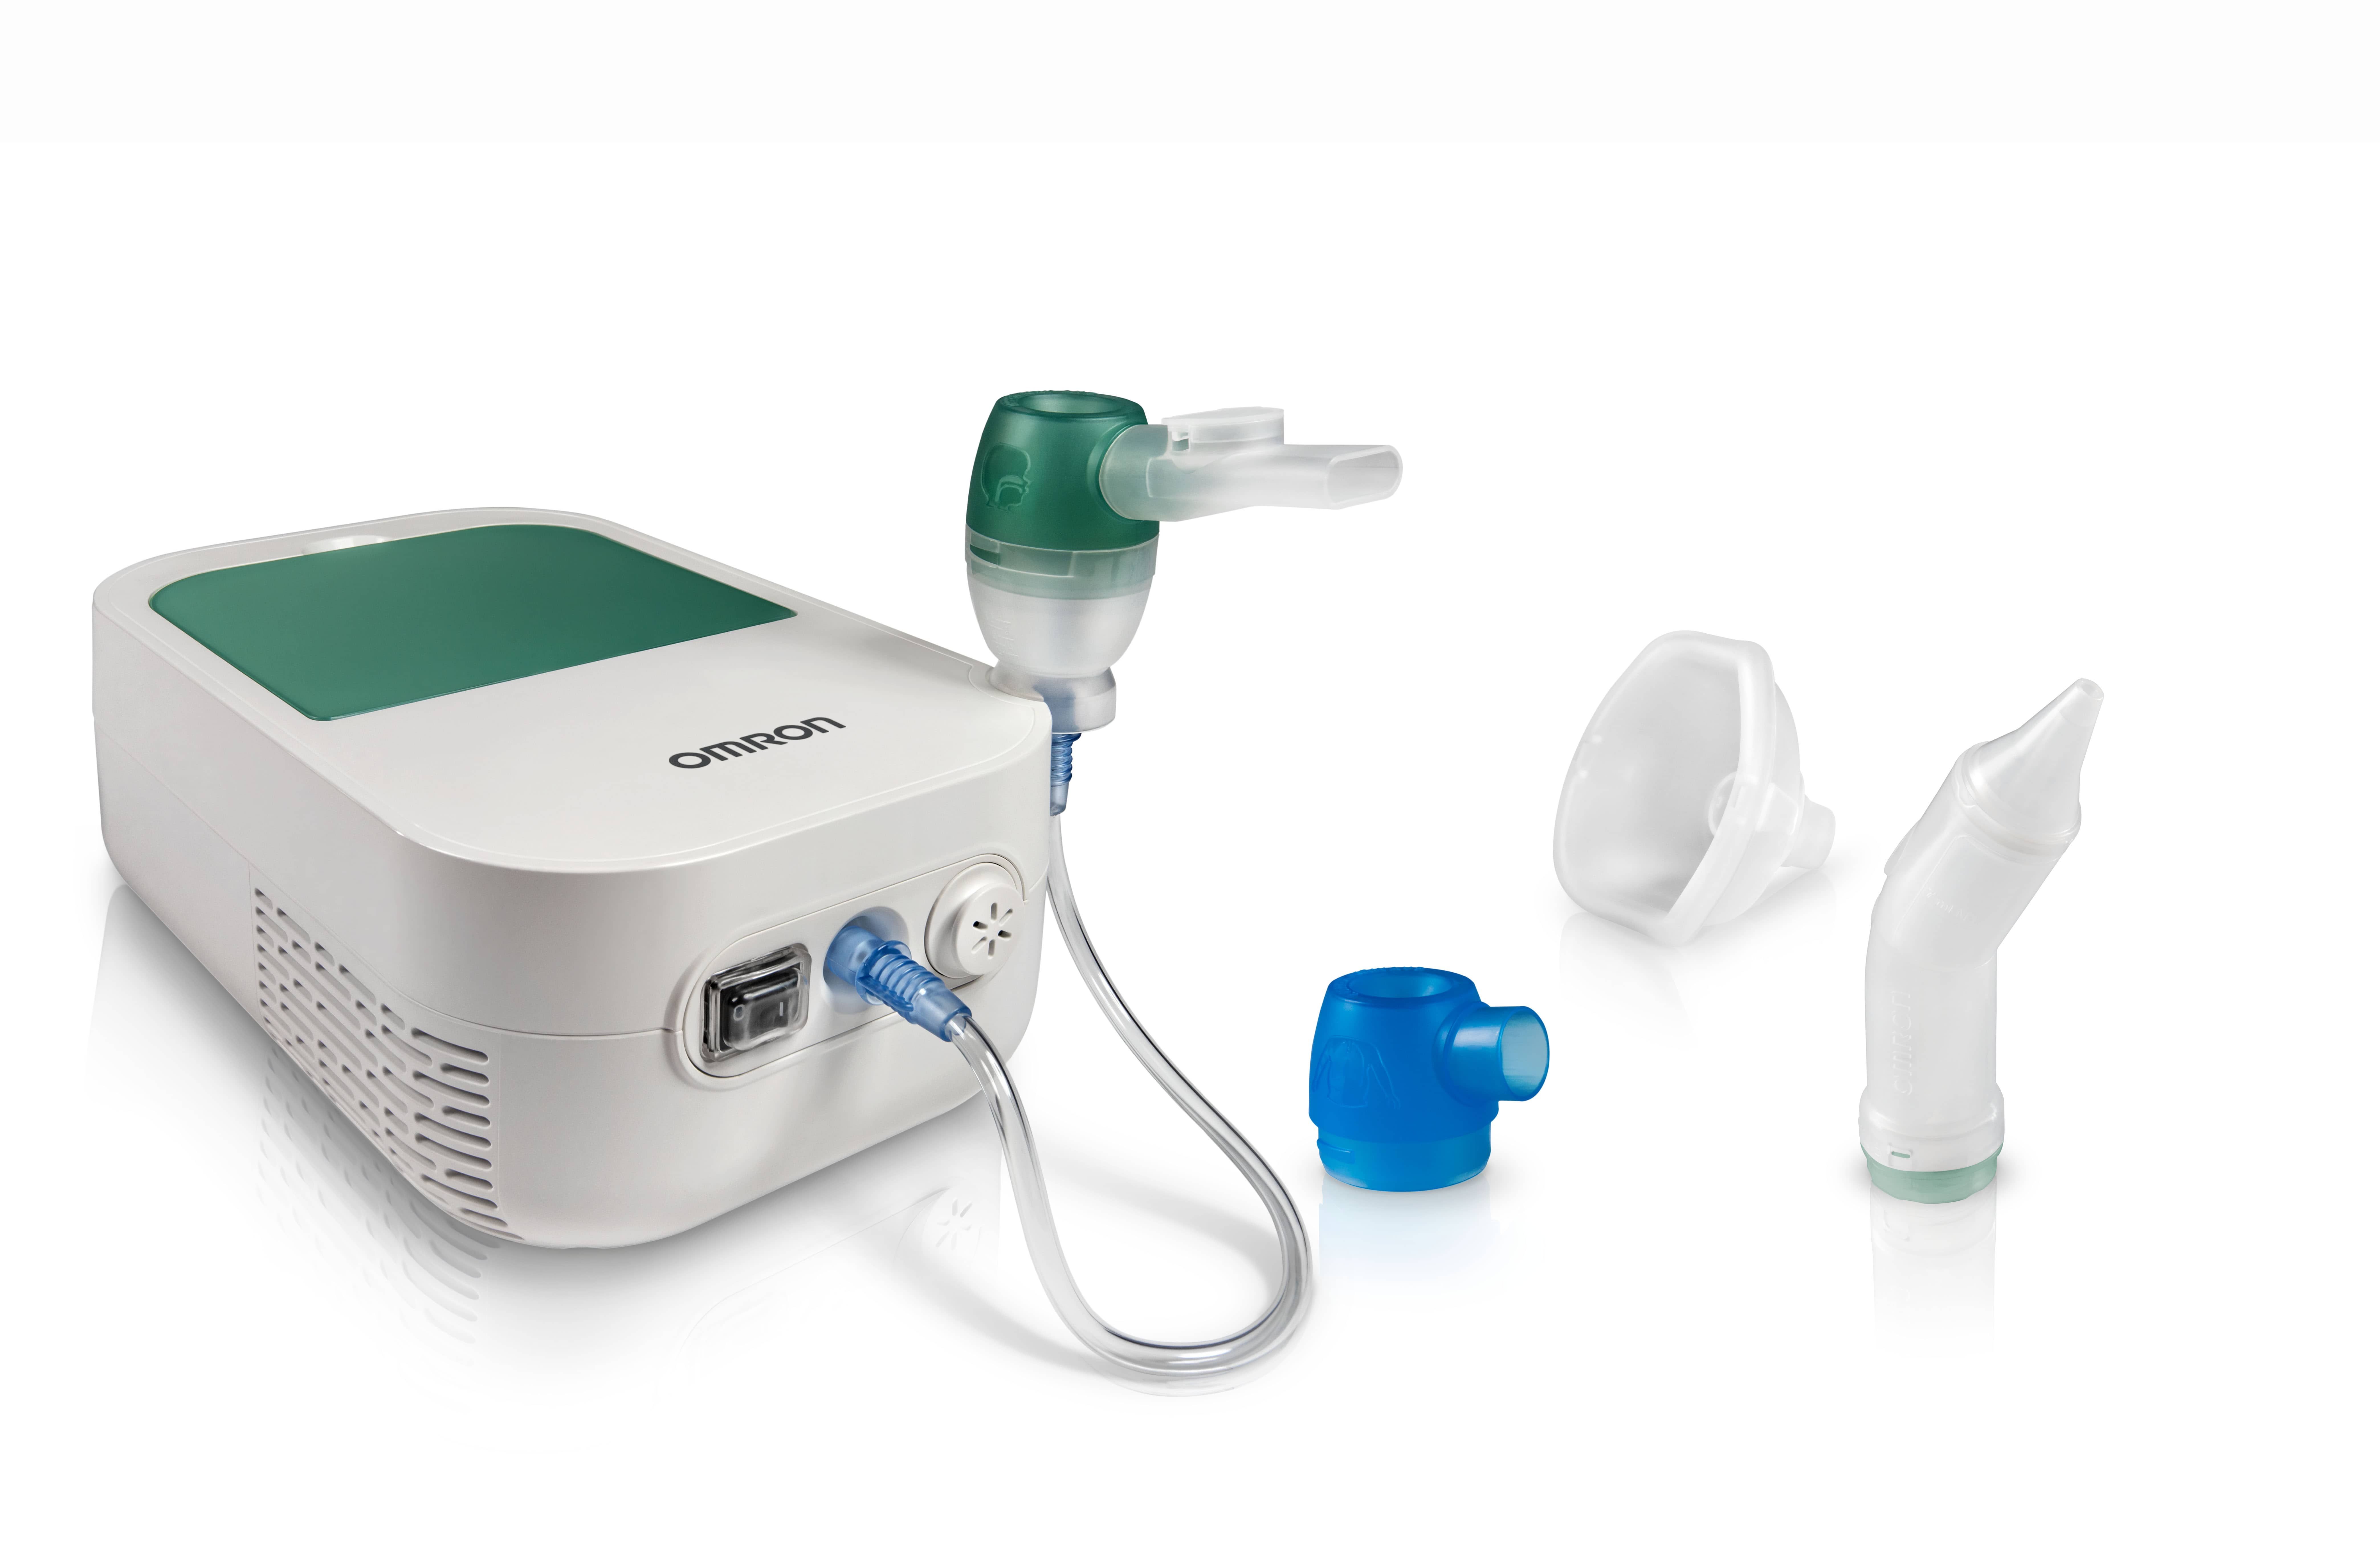 Nebuliseur Inhalateur, Portable Nébulisateur Medical pour Bebe